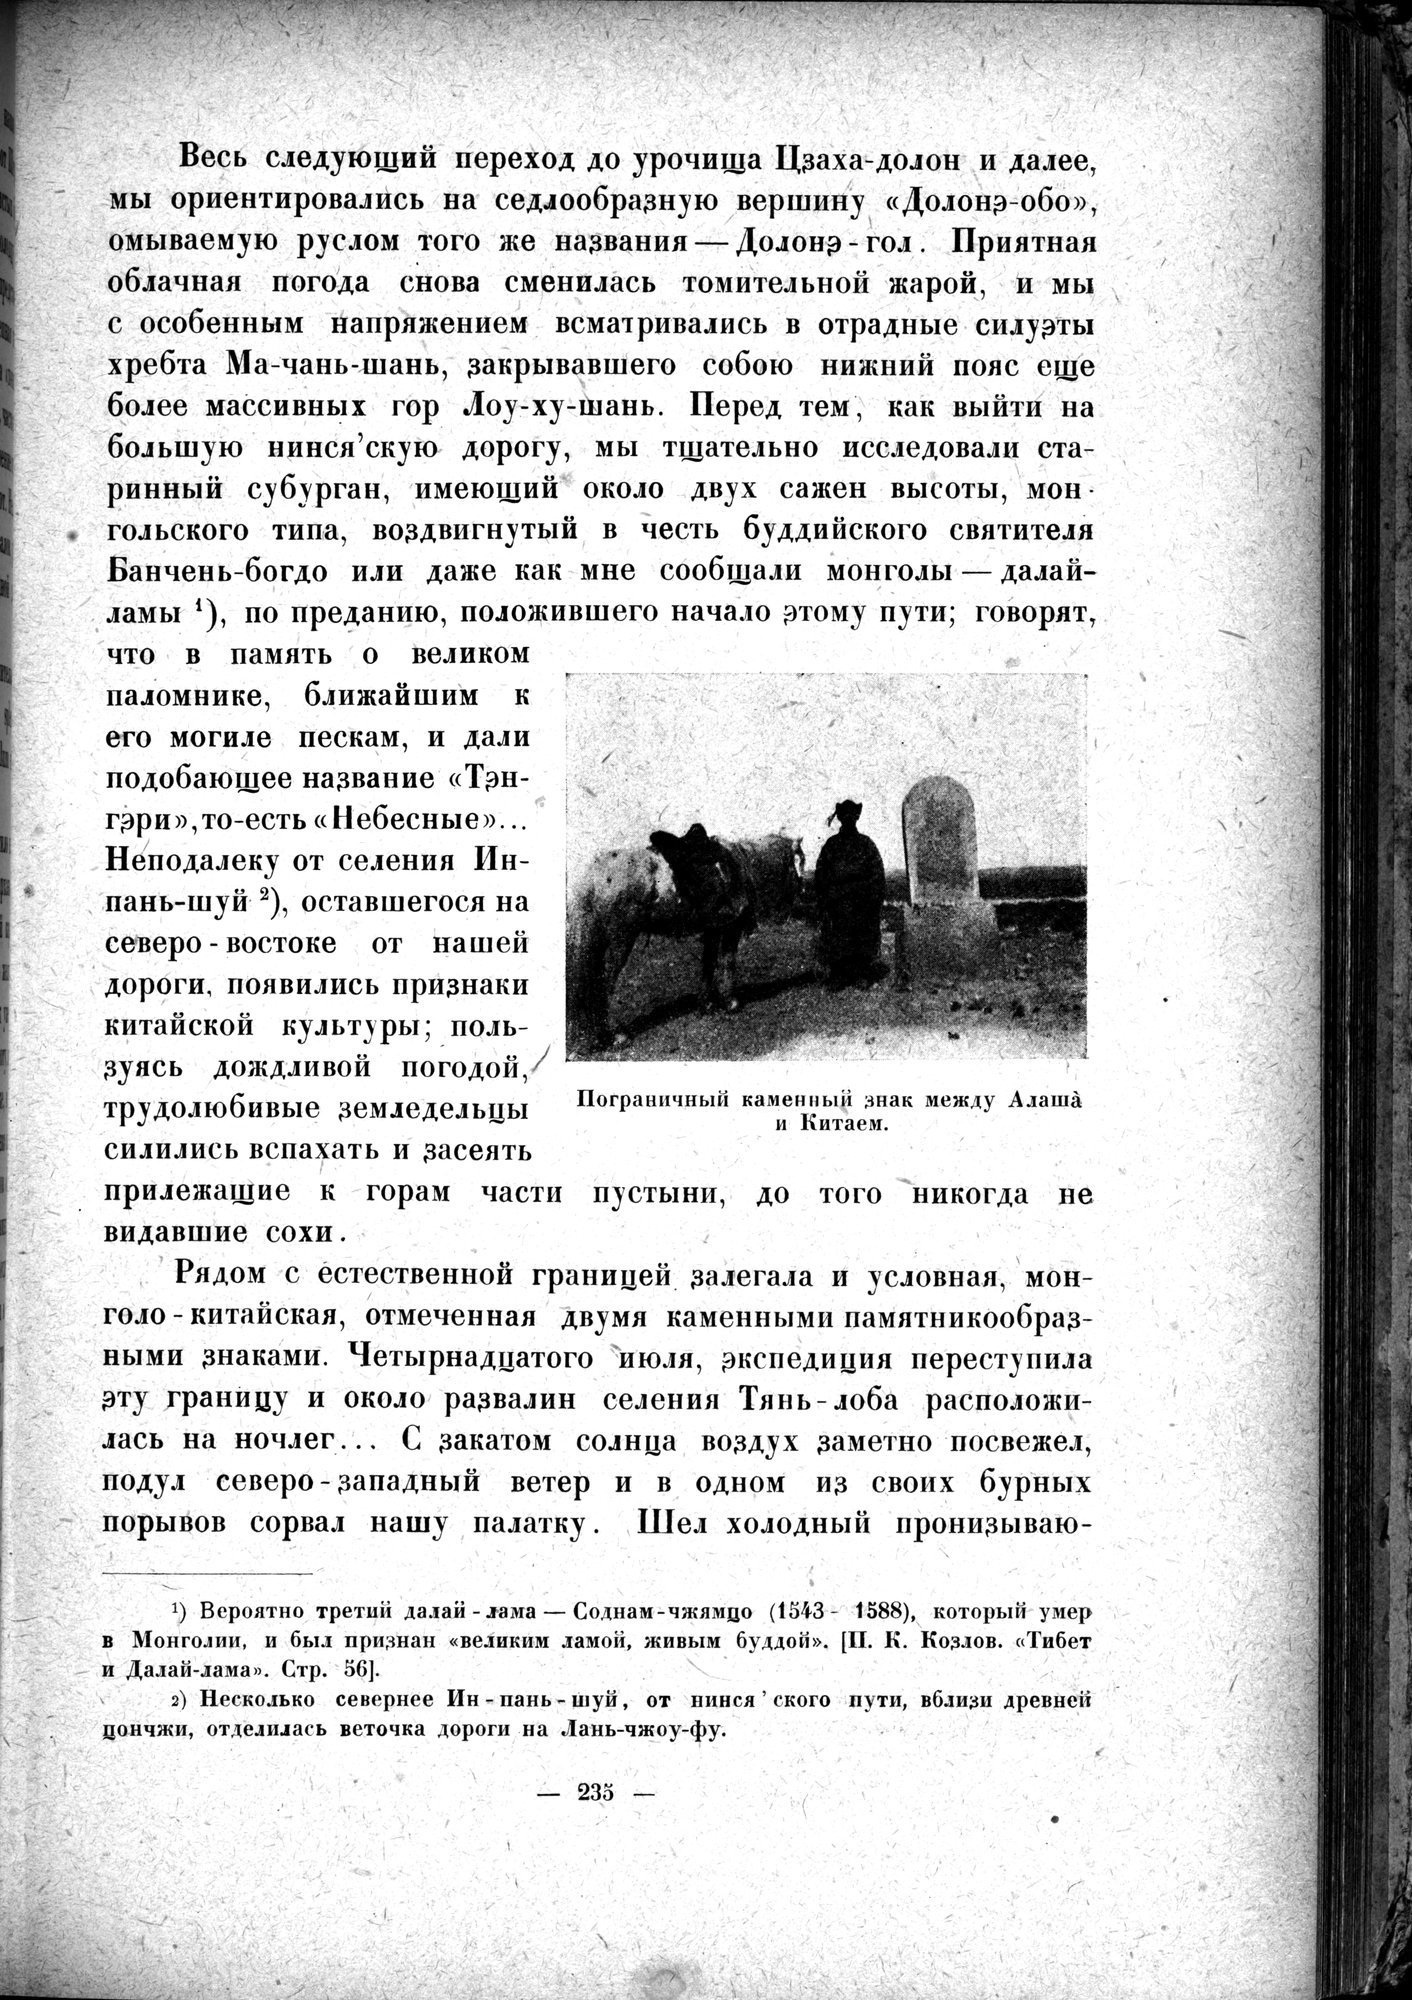 Mongoliya i Amdo i mertby gorod Khara-Khoto : vol.1 / Page 281 (Grayscale High Resolution Image)